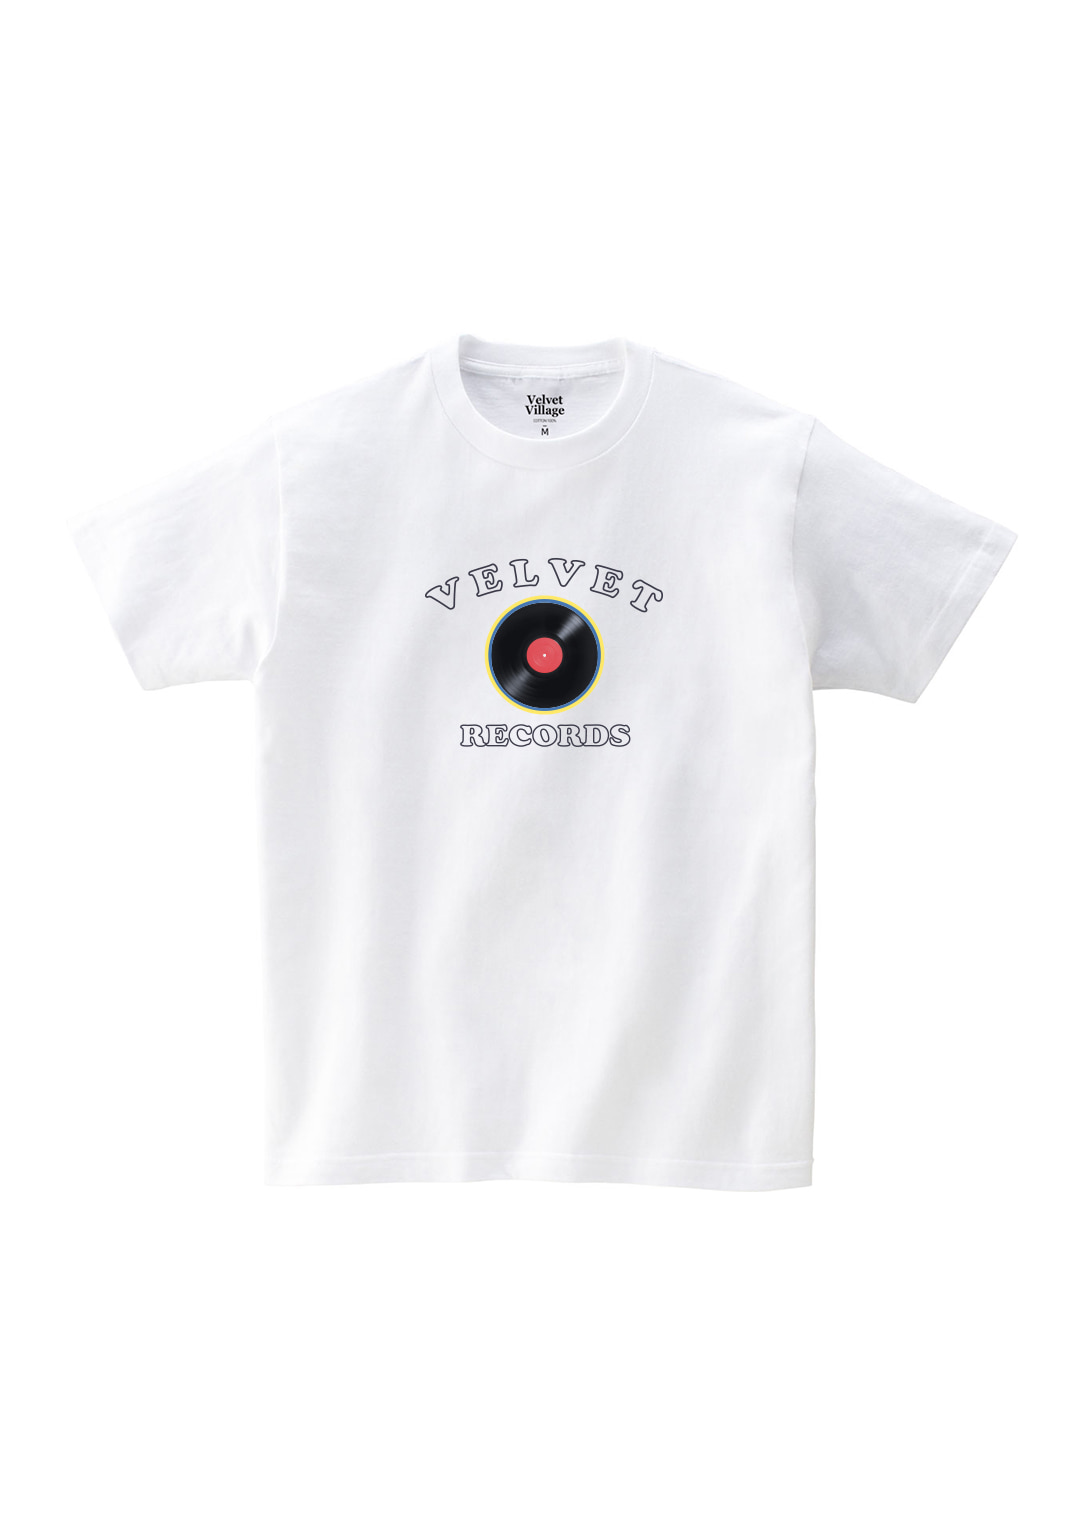 Records T-shirt (White)